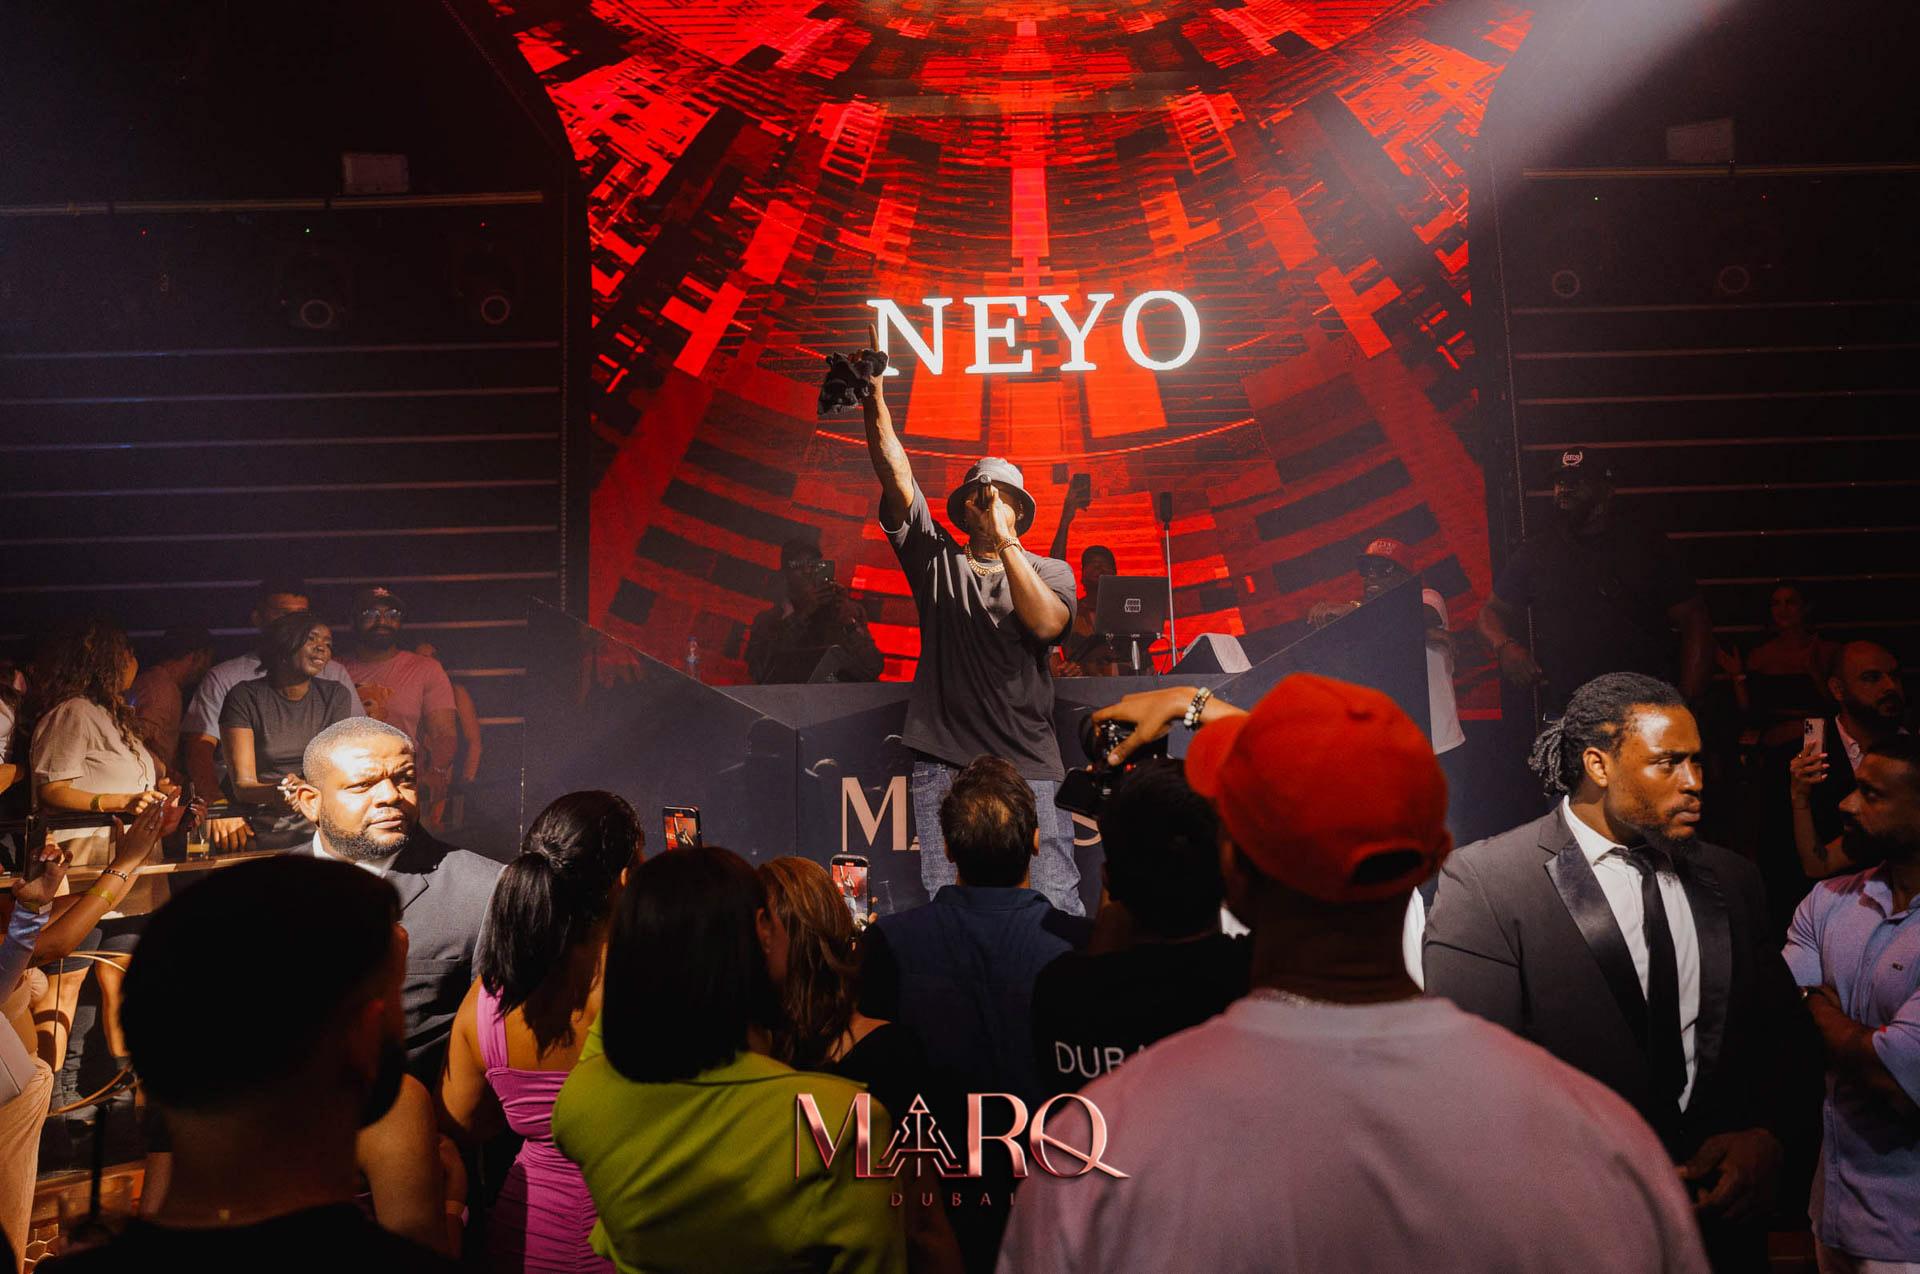 Marq Dubai - Throwback to the epic grand opening headlined by NE-YO